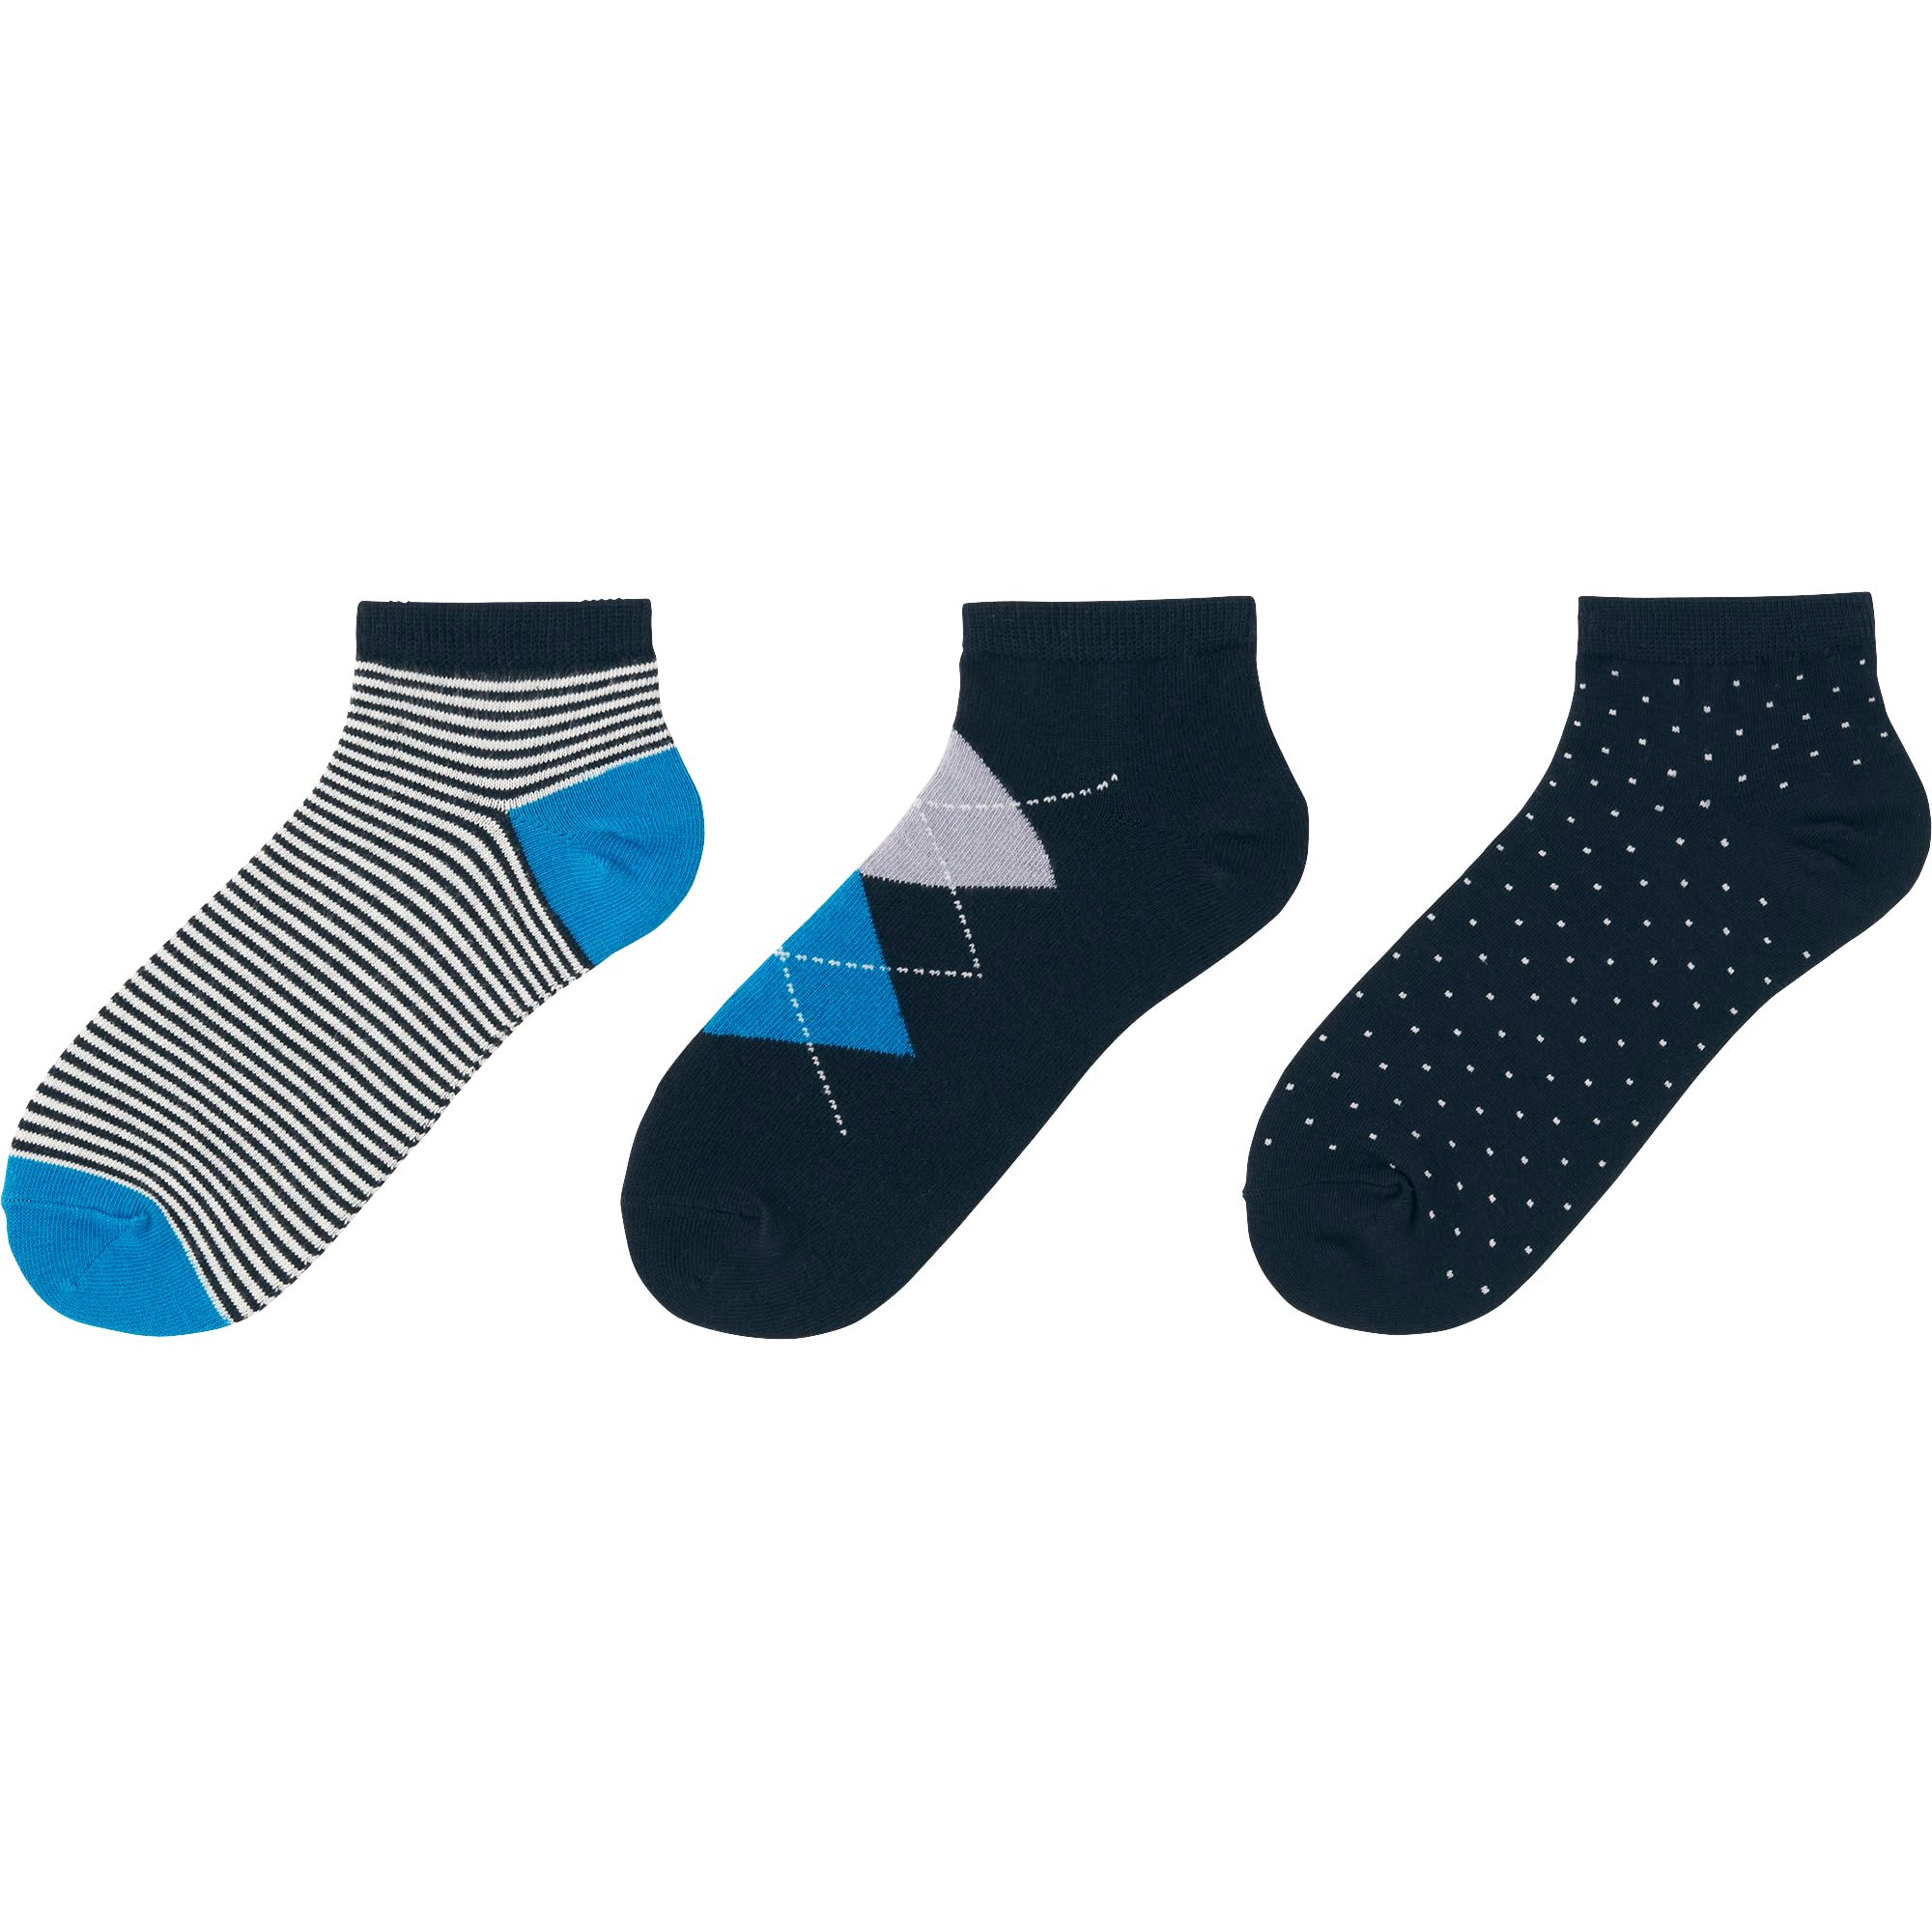 Uniqlo Short Socks - 3 Pack (Basic) in Blue (NAVY) | Lyst